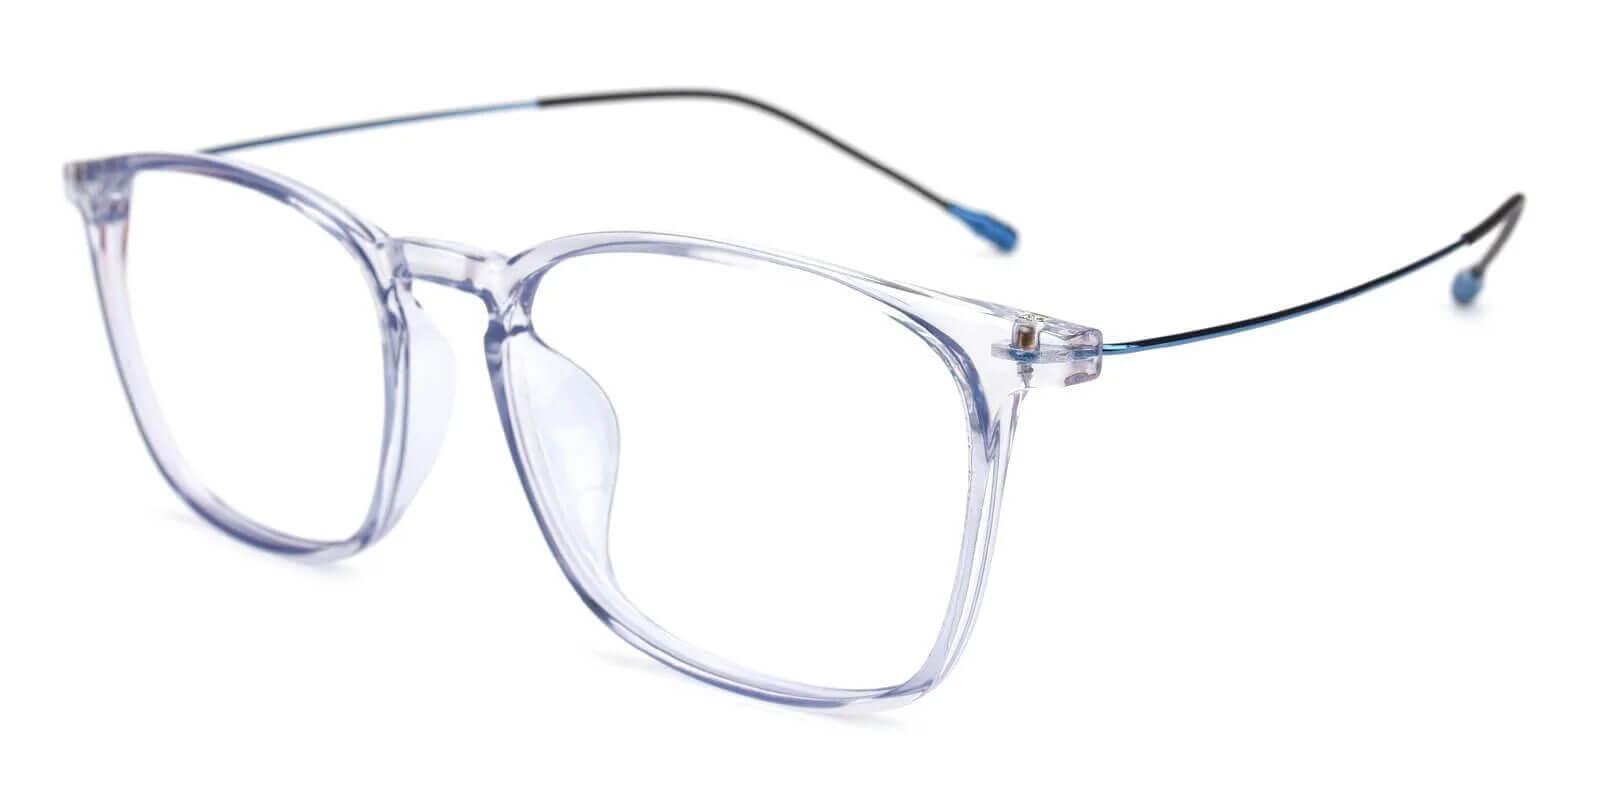 Clinton Blue TR Eyeglasses , UniversalBridgeFit , Lightweight Frames from ABBE Glasses